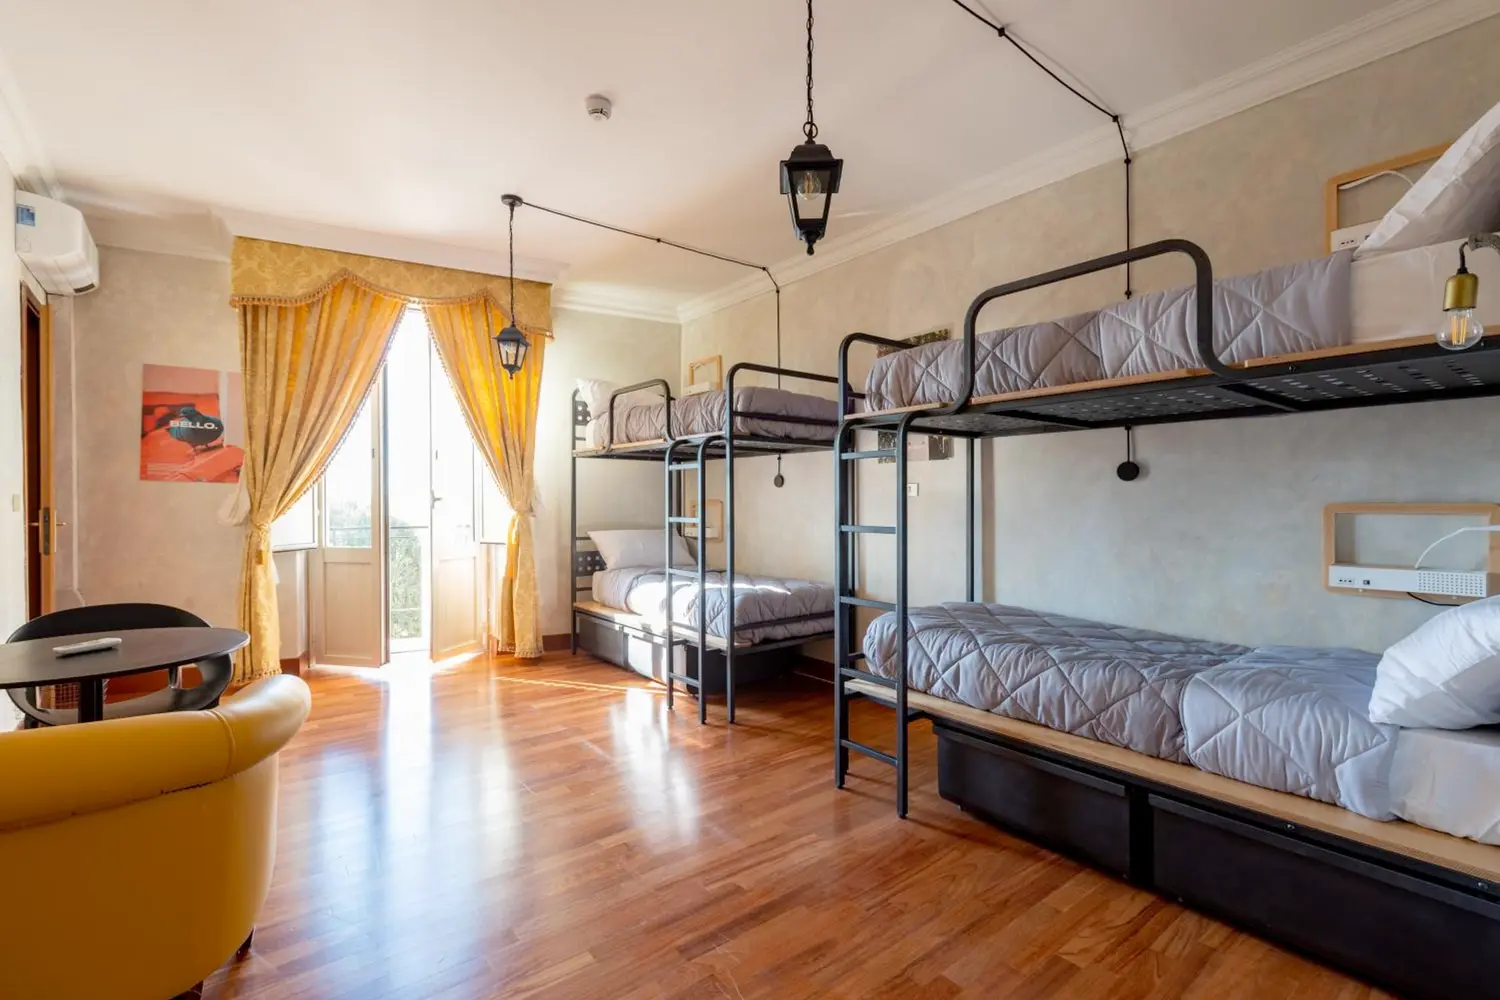 Dorm room at the Ostello Bello hostel in Rome